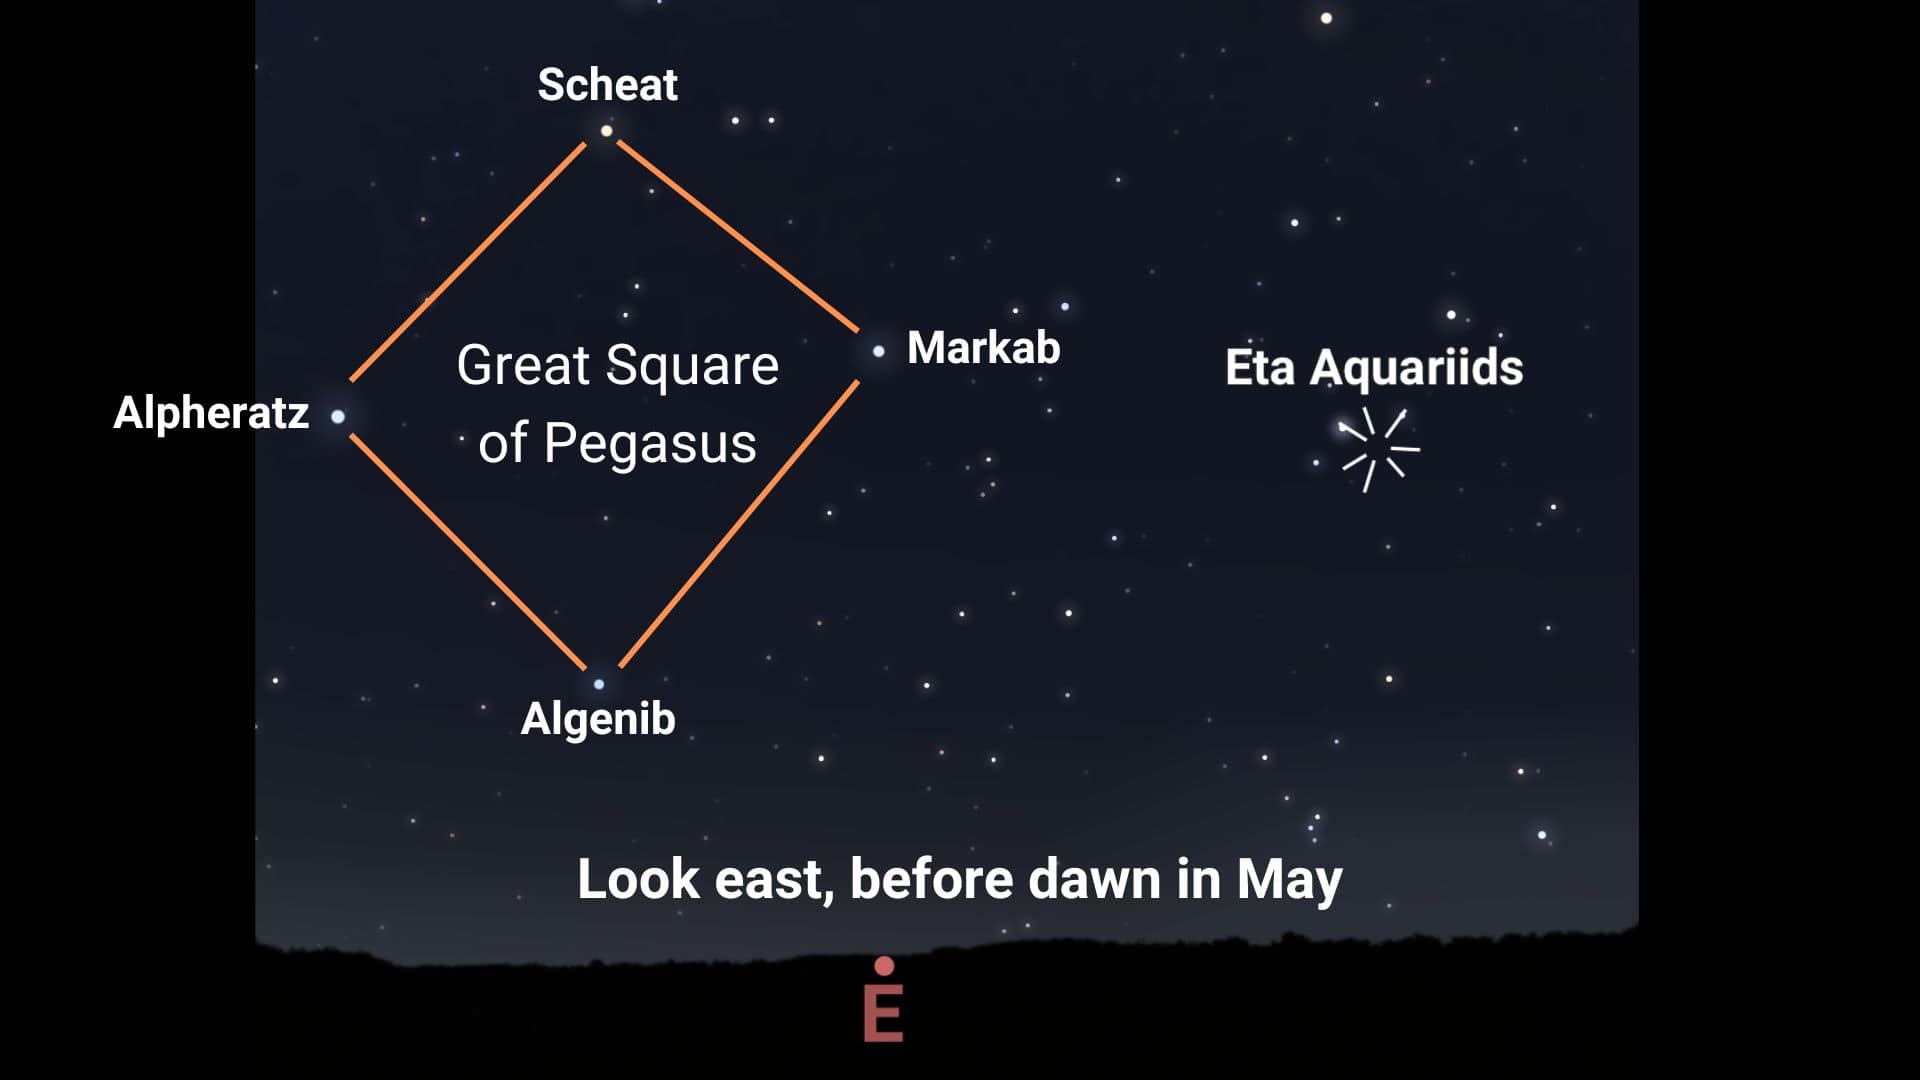 Radiant position of the Eta Aquariid meteor shower